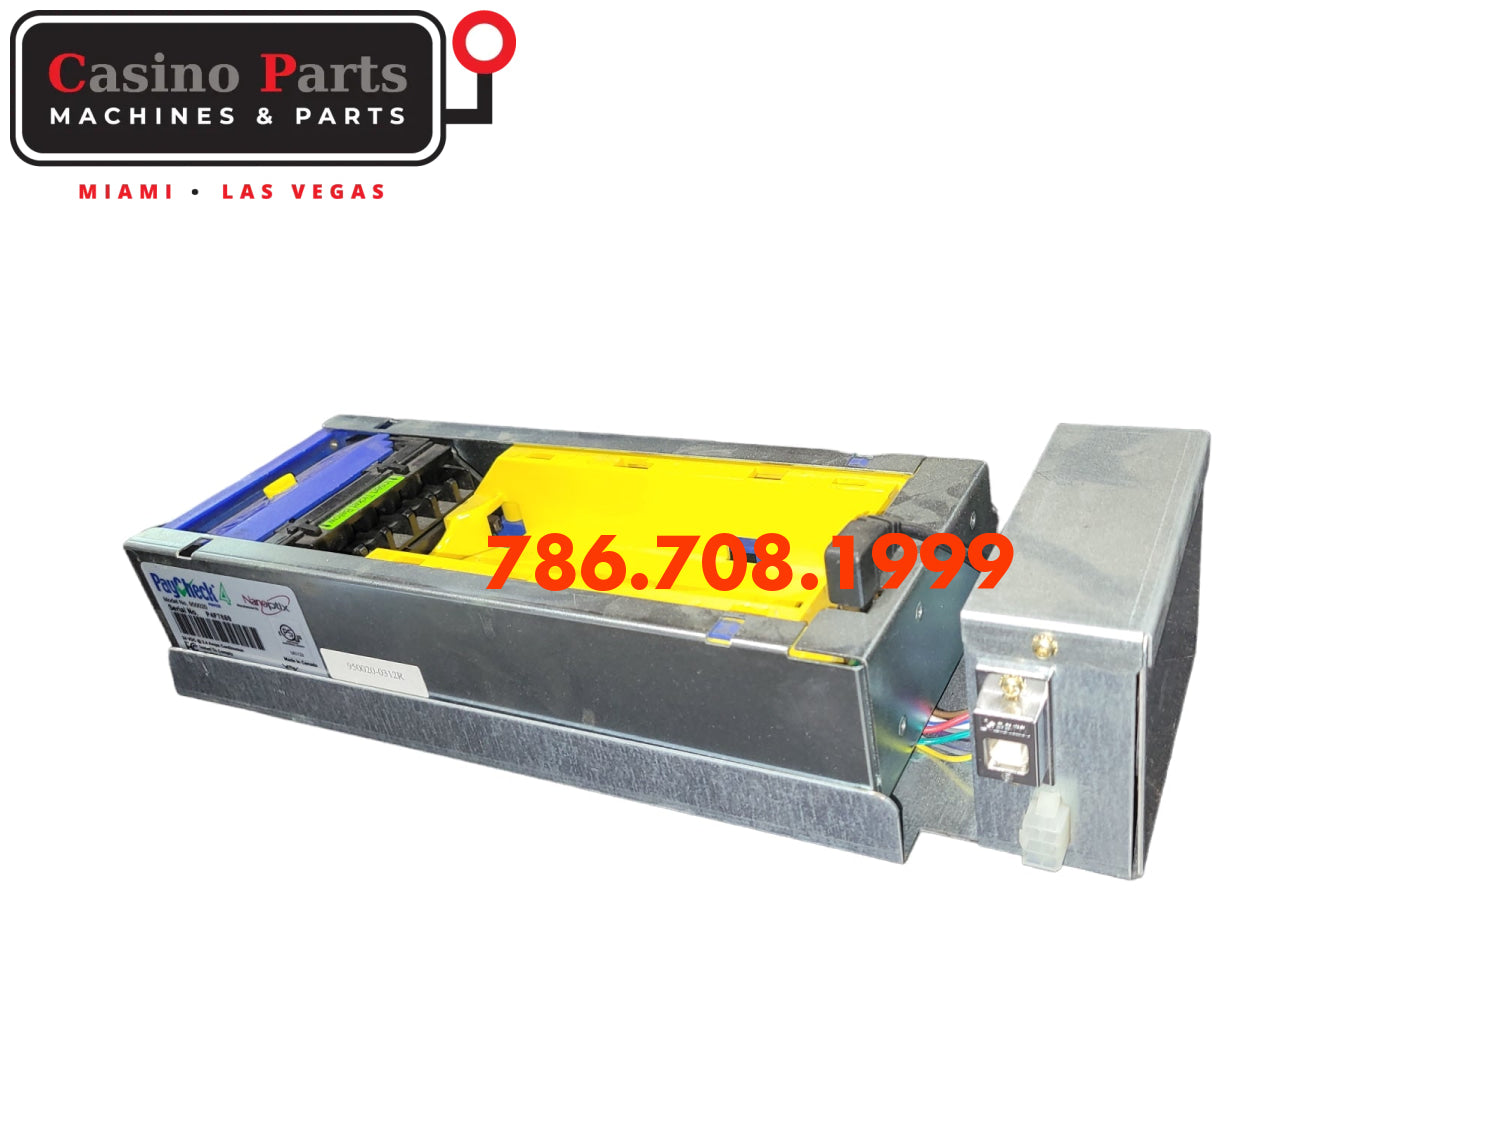 Paycheck - Thermal Printer Nanoptix 4 950020 Ticket